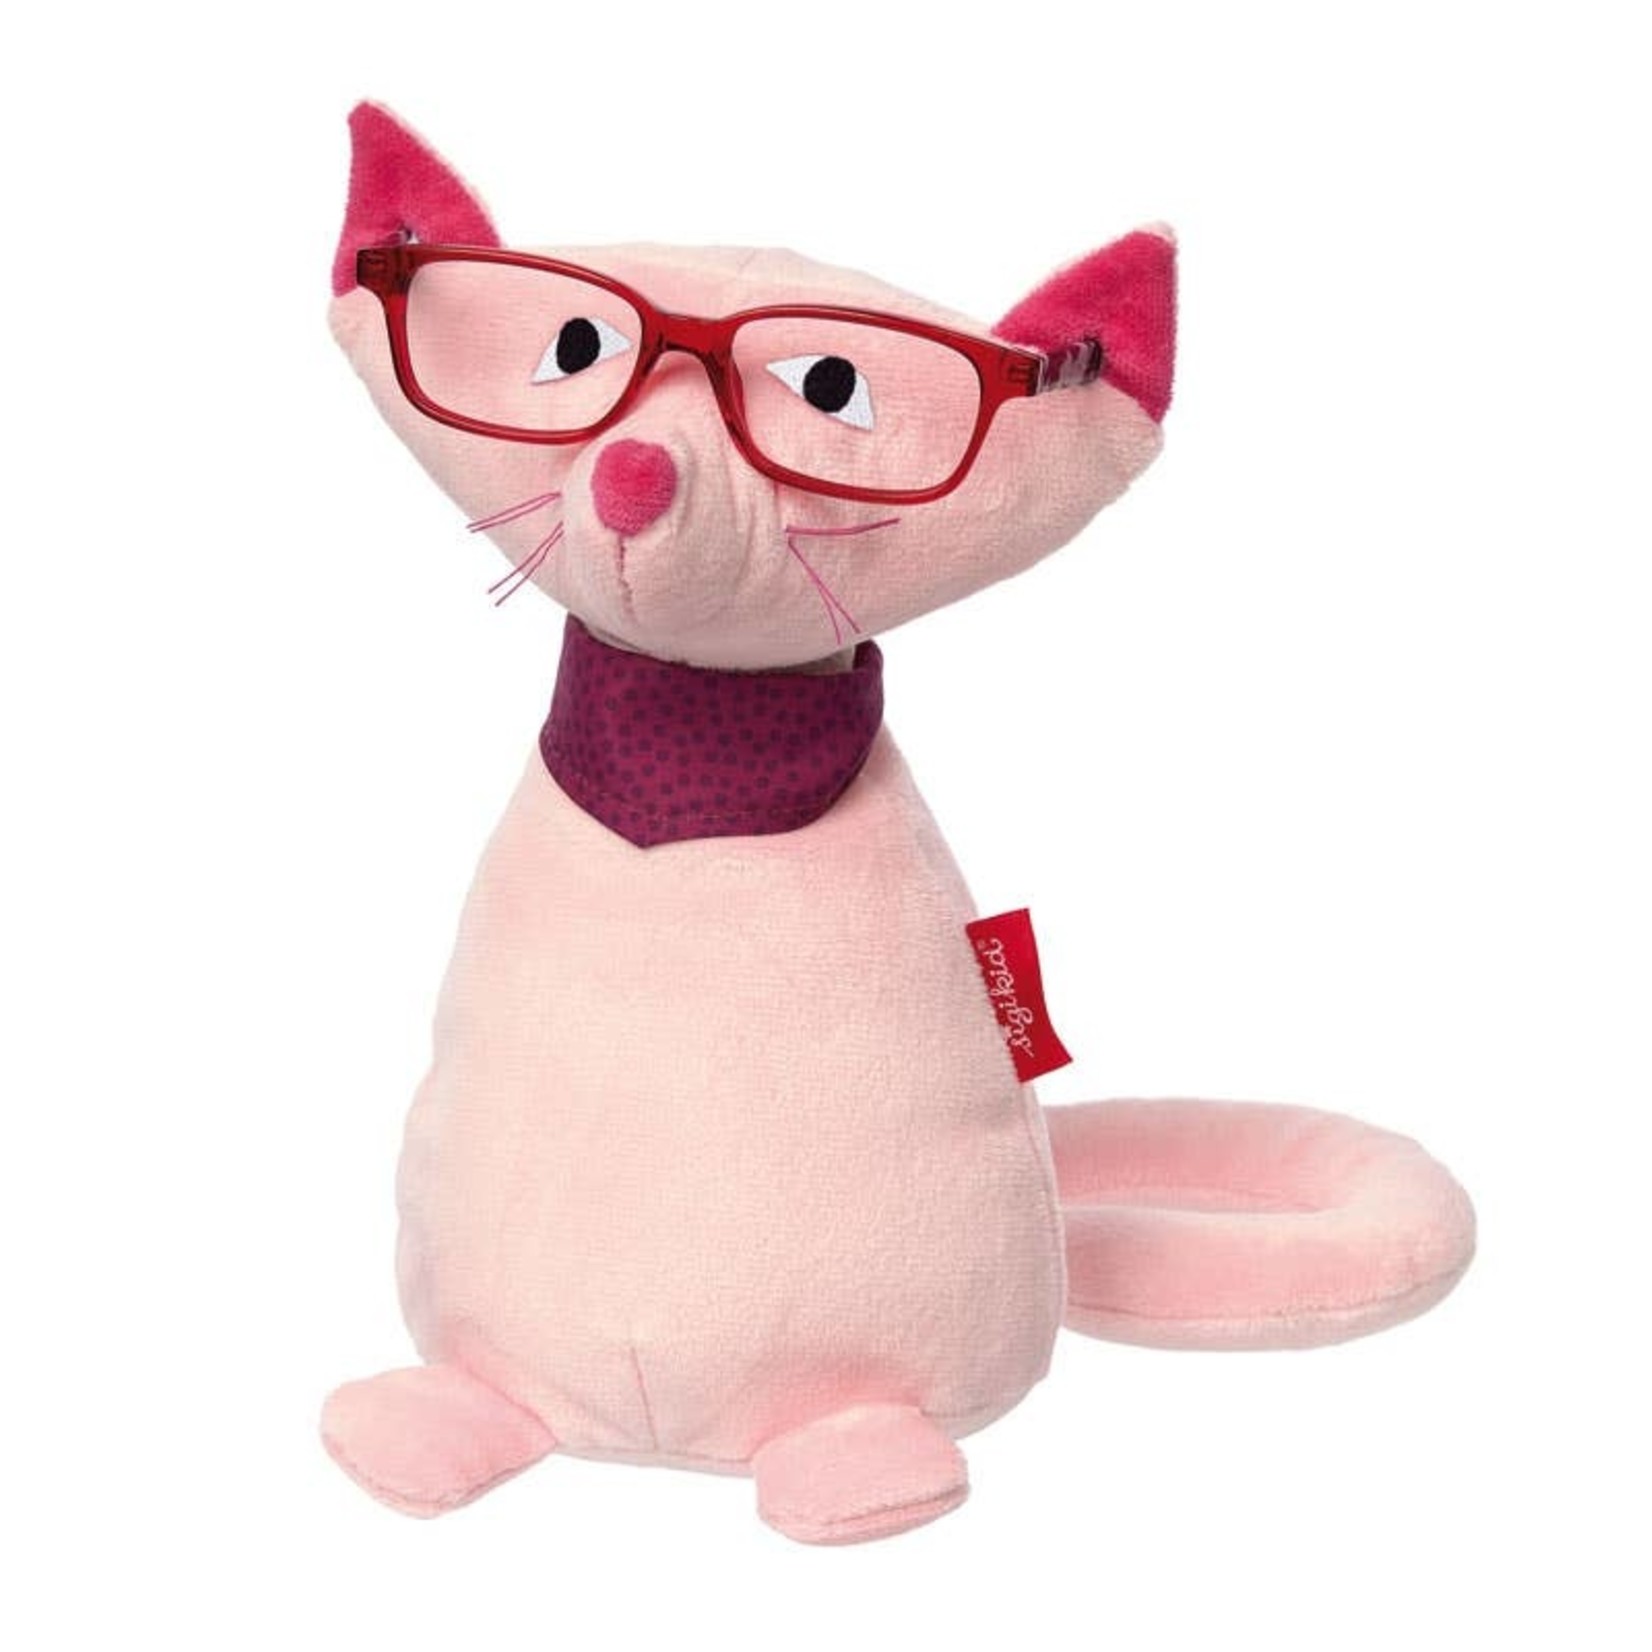 Cat Eyeglass Holder